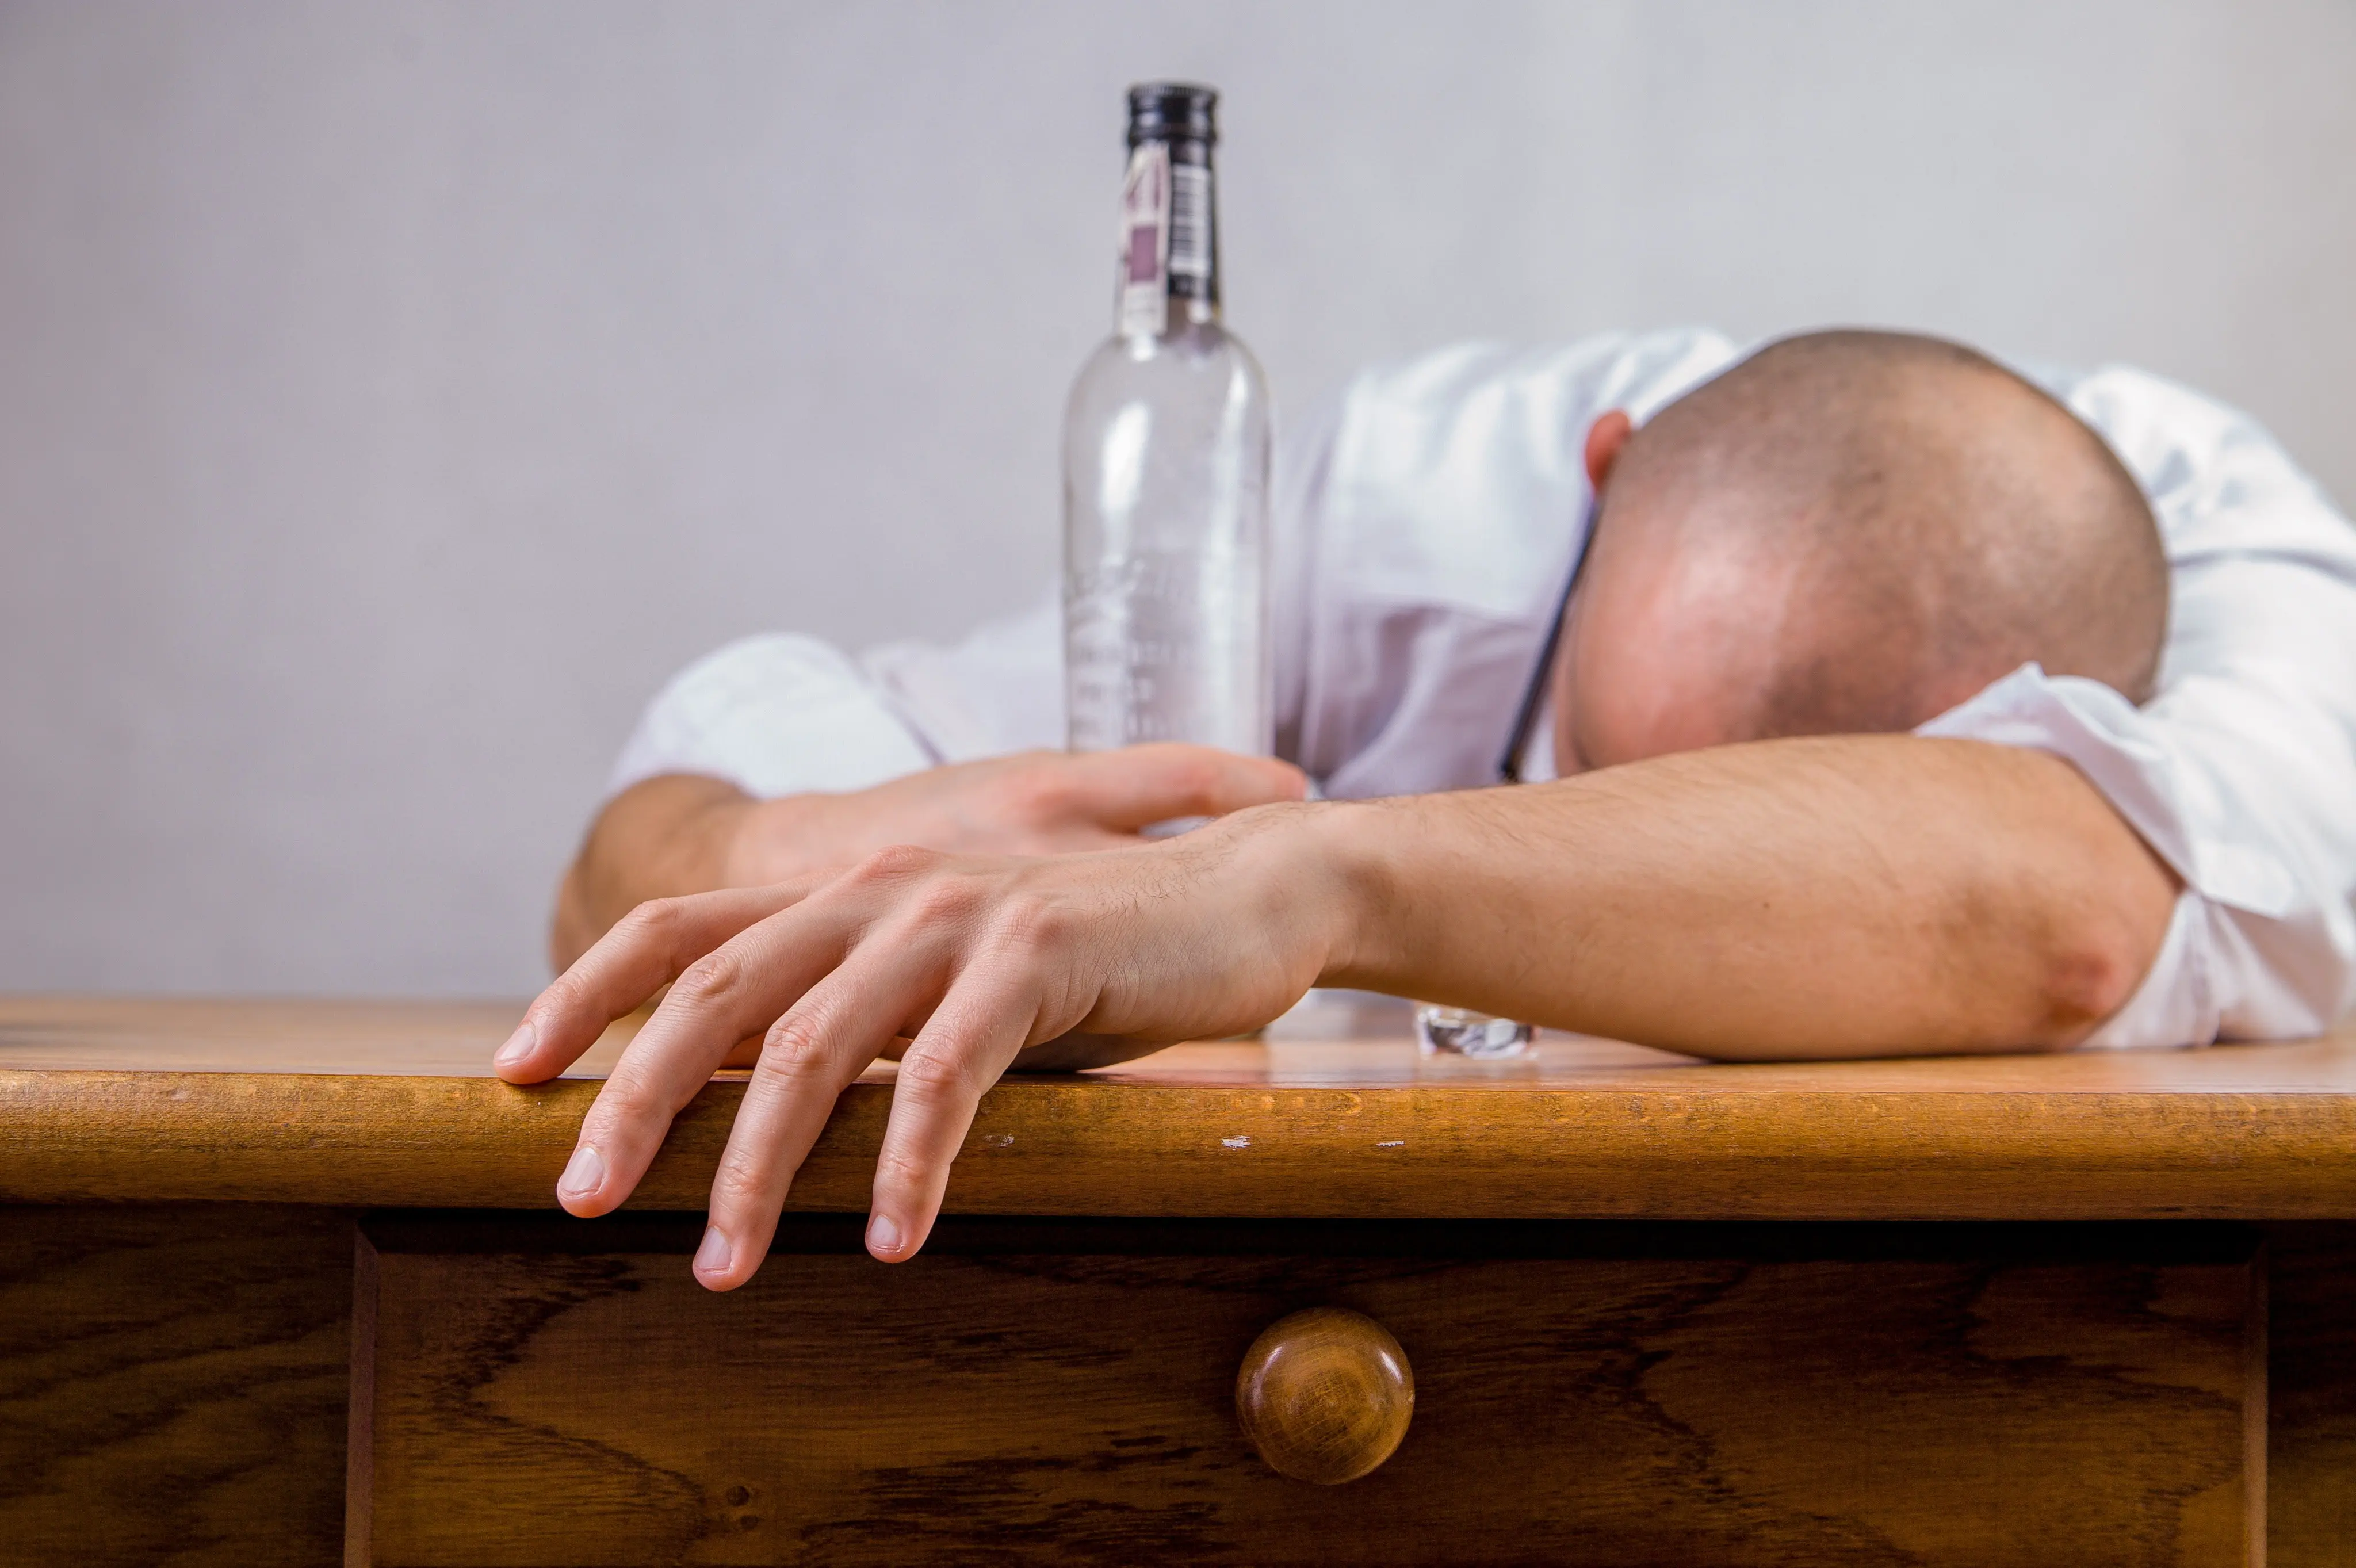 alcoholism and binge drinking